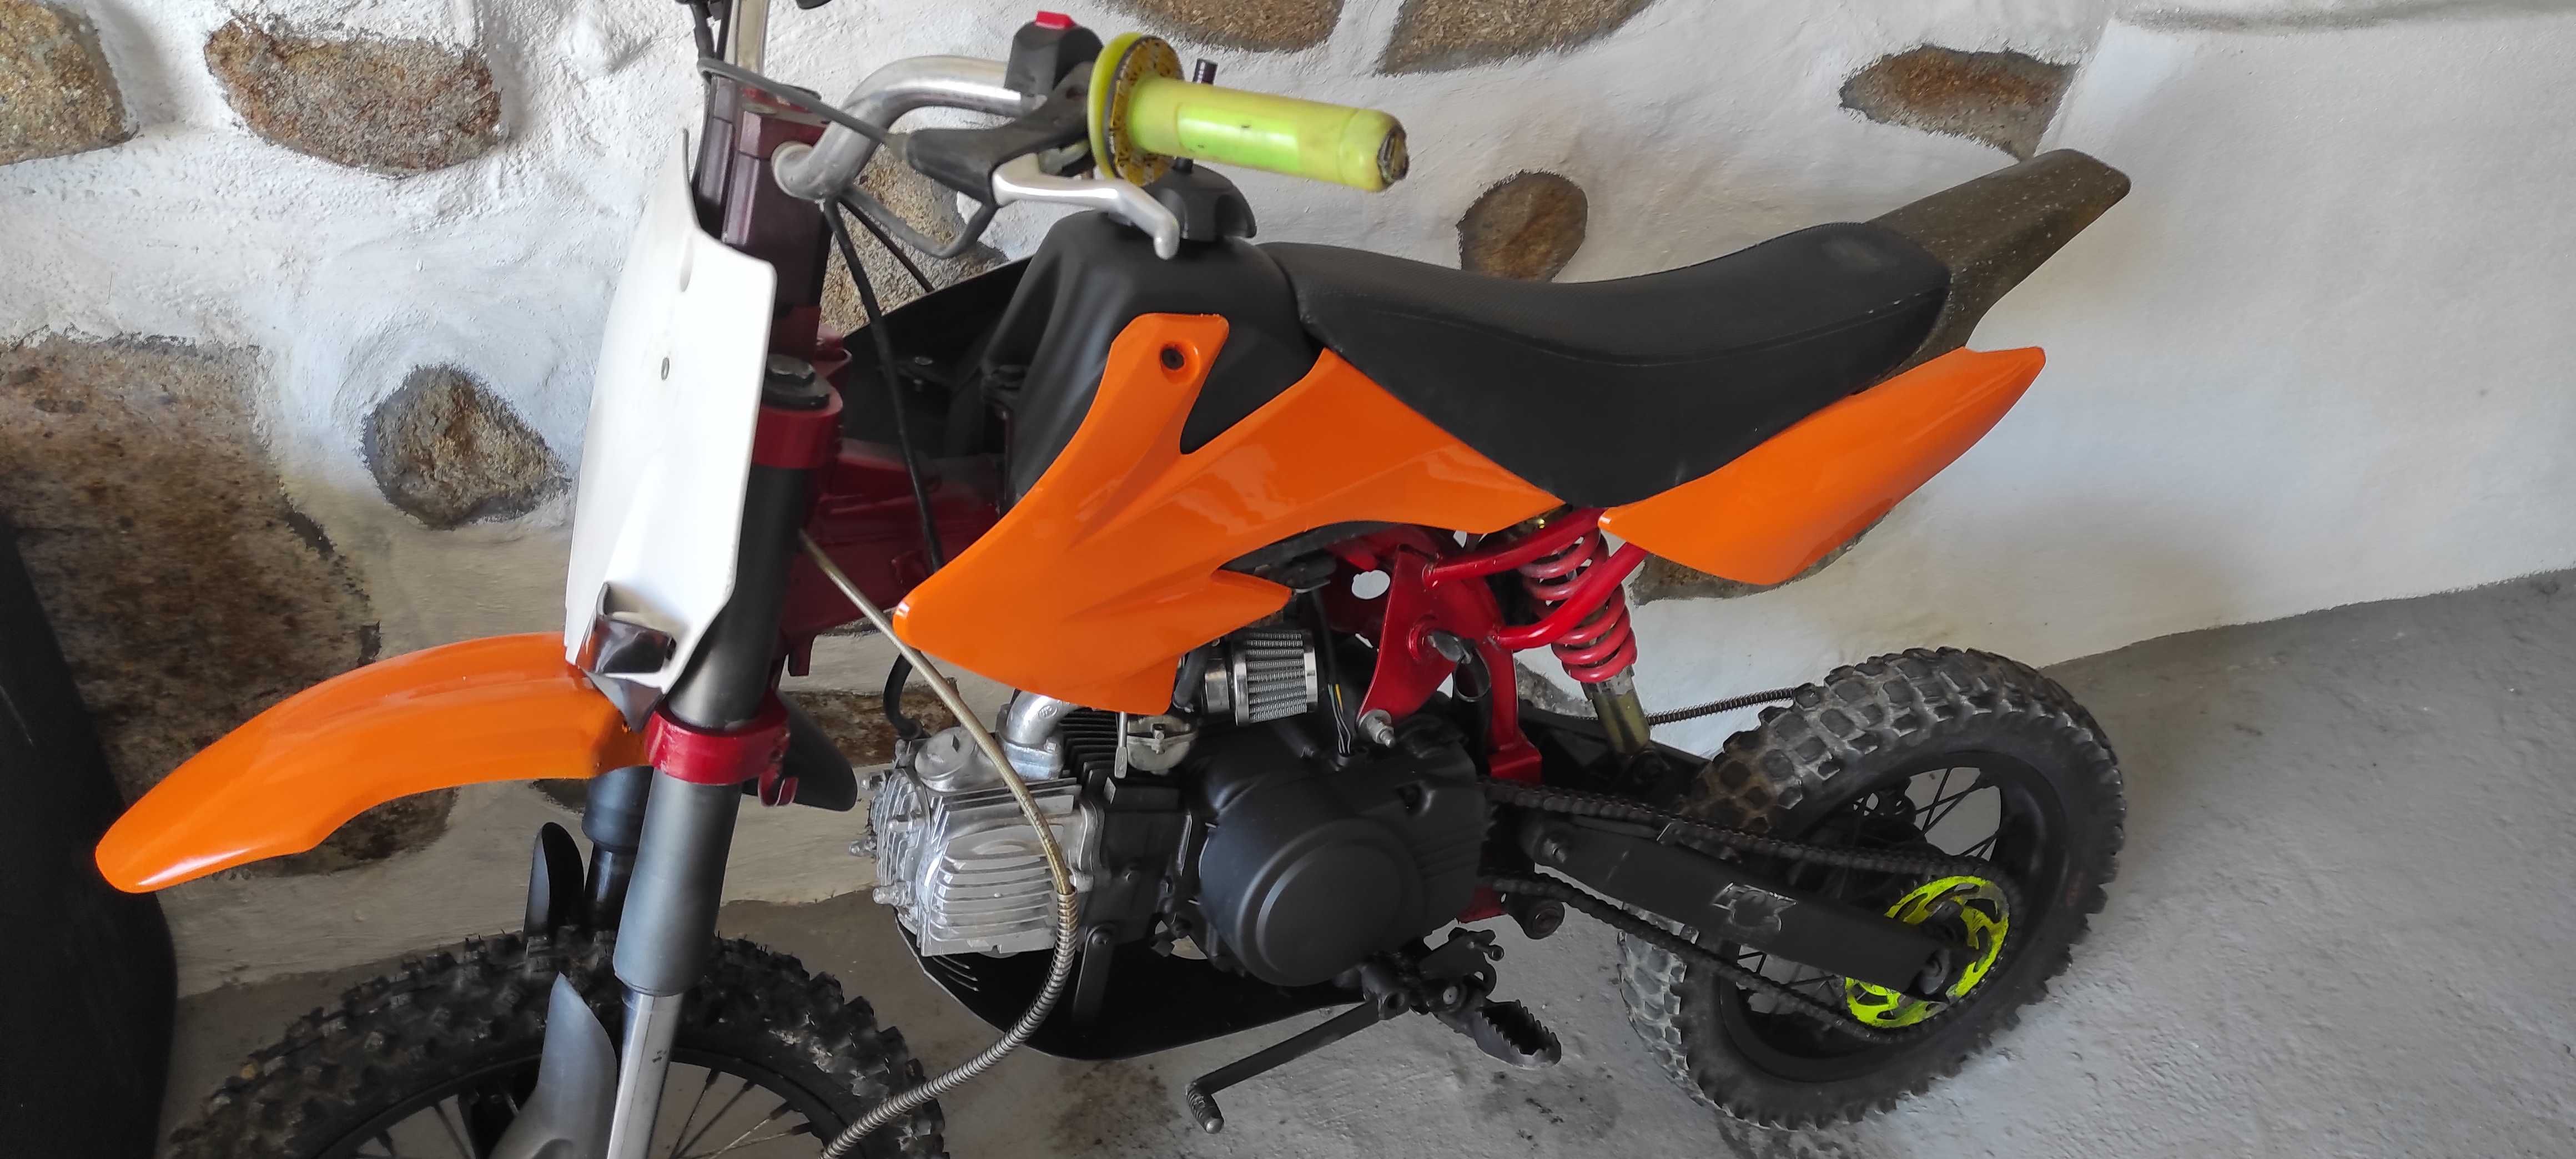 Pitbik 125 moto de monte